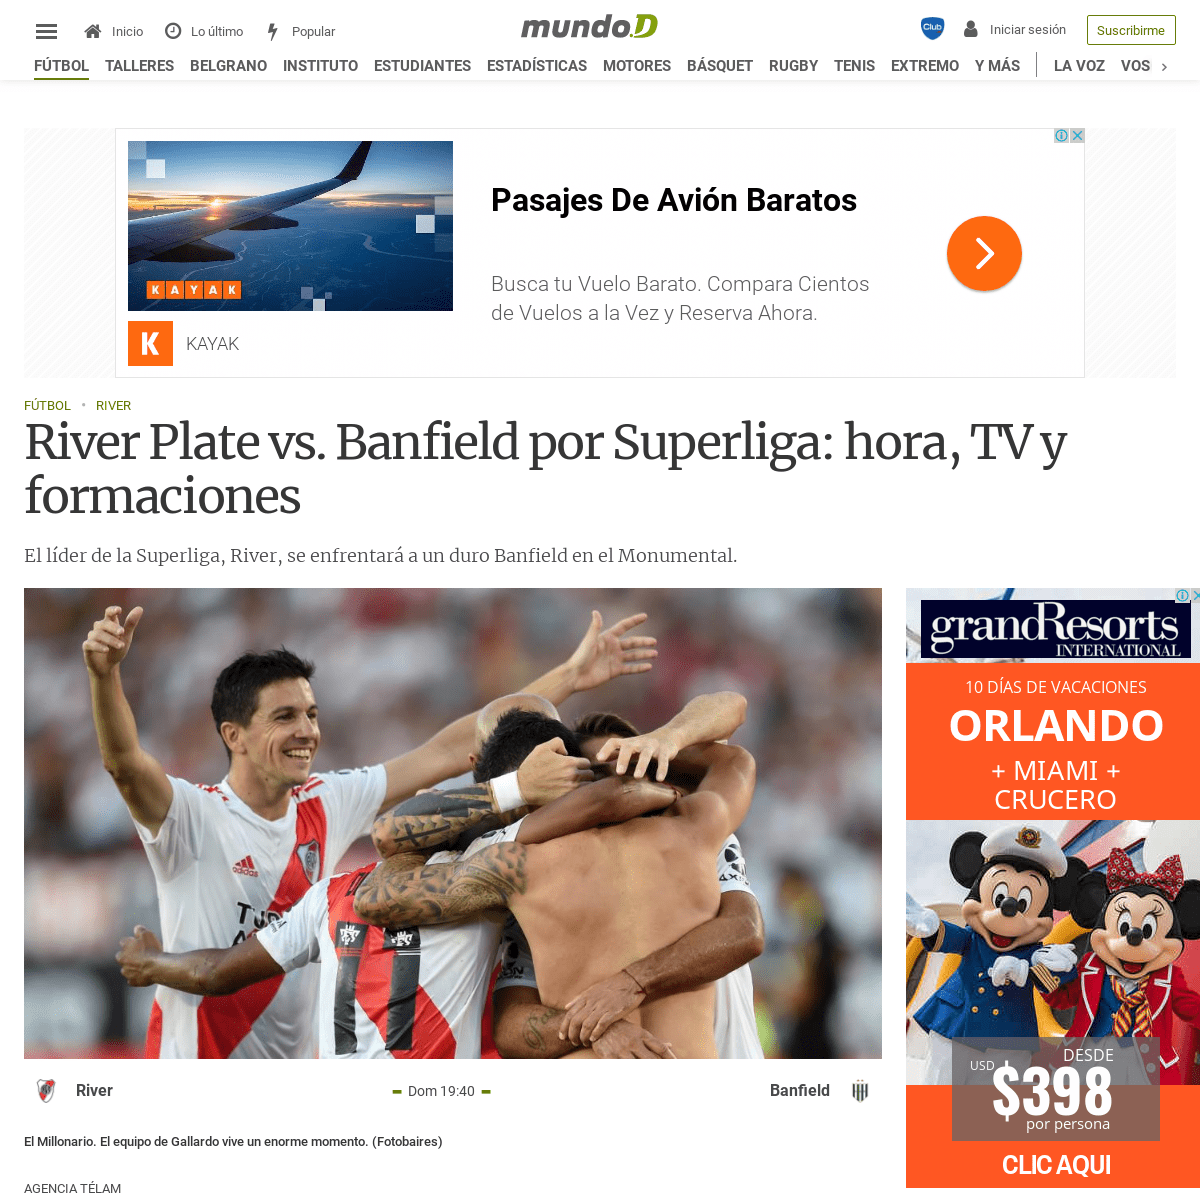 A complete backup of mundod.lavoz.com.ar/futbol/river-plate-vs-banfield-por-superliga-hora-tv-y-formaciones